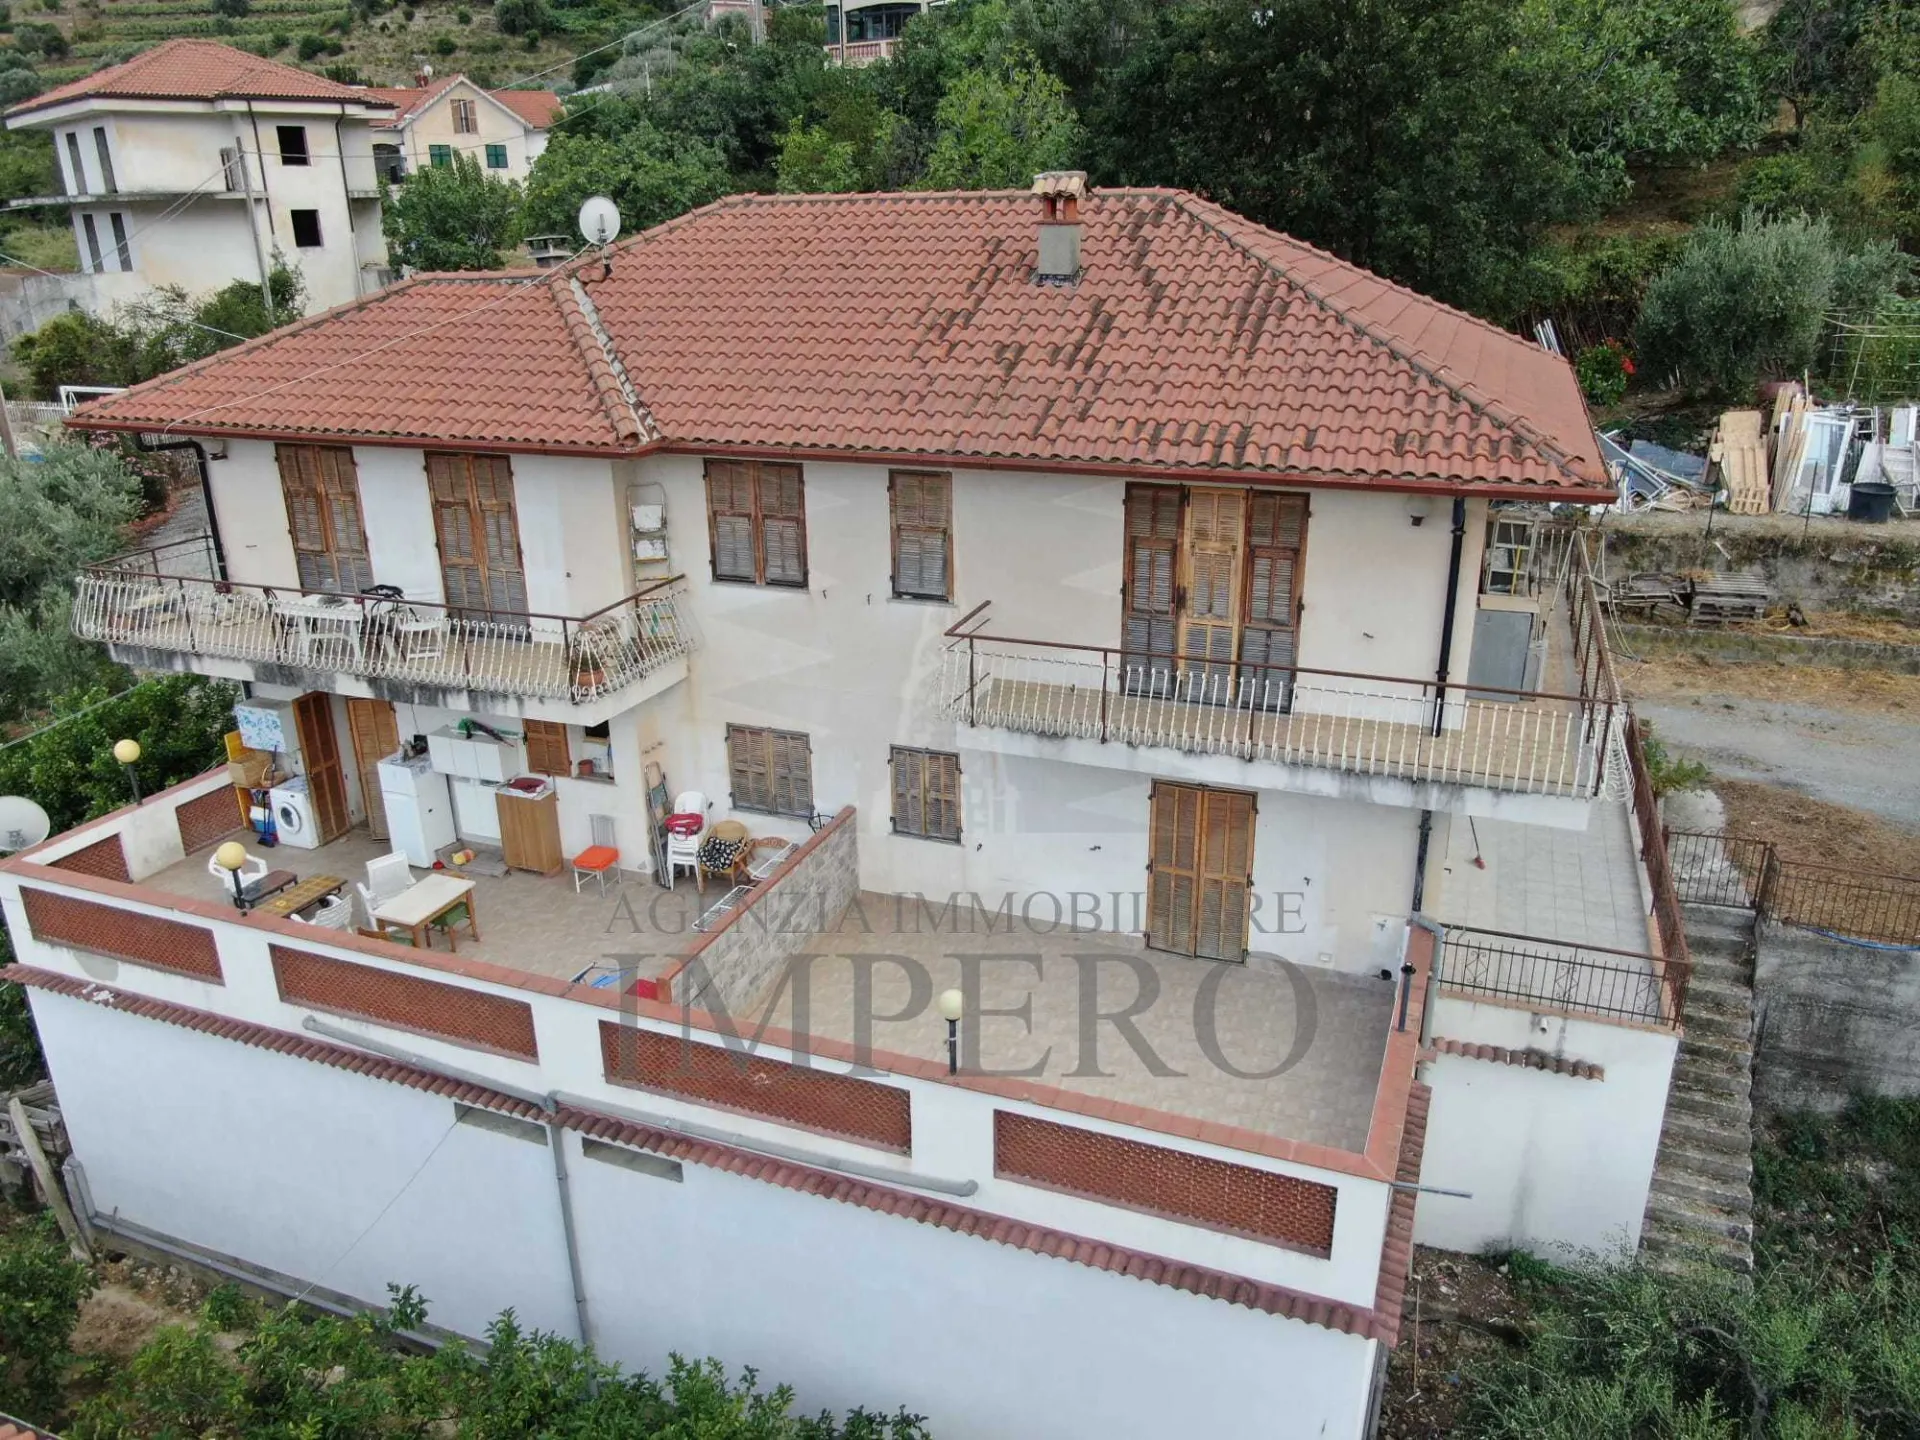 Immagine per Porzione di casa in vendita a Ventimiglia